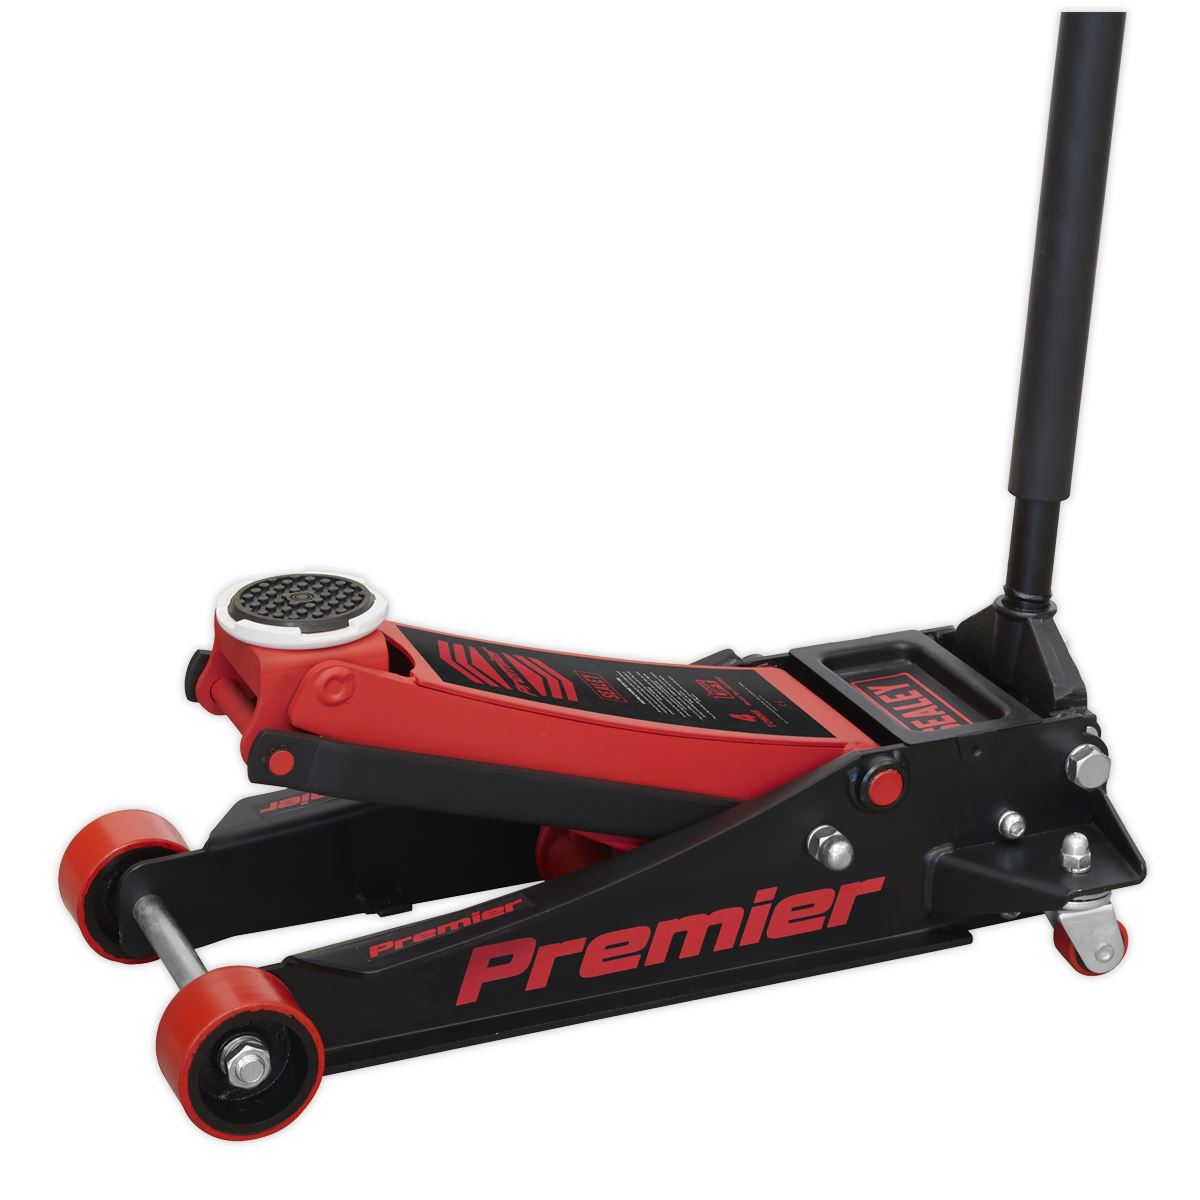 Sealey Premier Premier Low Profile Trolley Jack with Rocket Lift 4 Tonne - Red